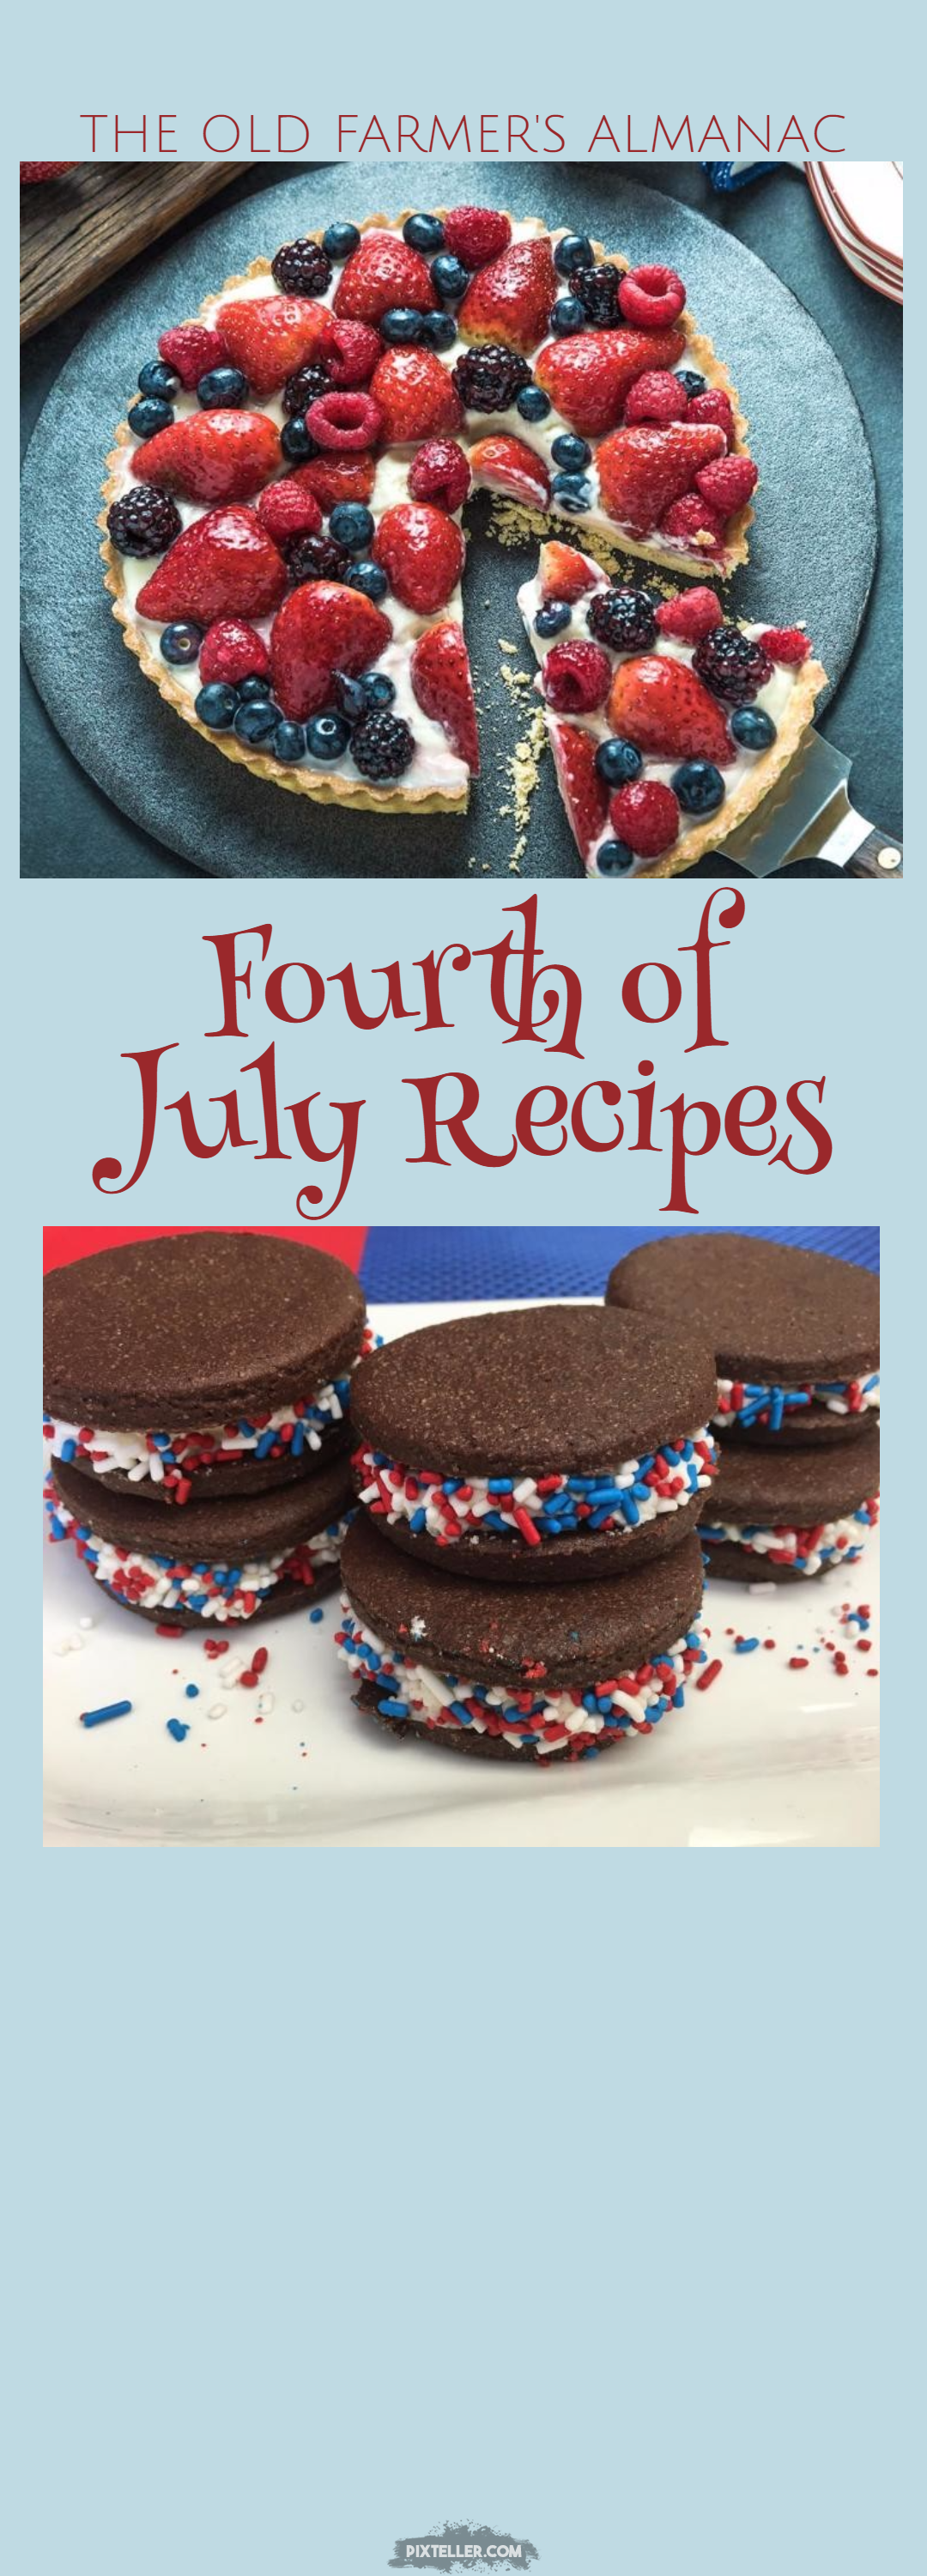 OFA 3-28-17 Fourth of July Recipes Design 